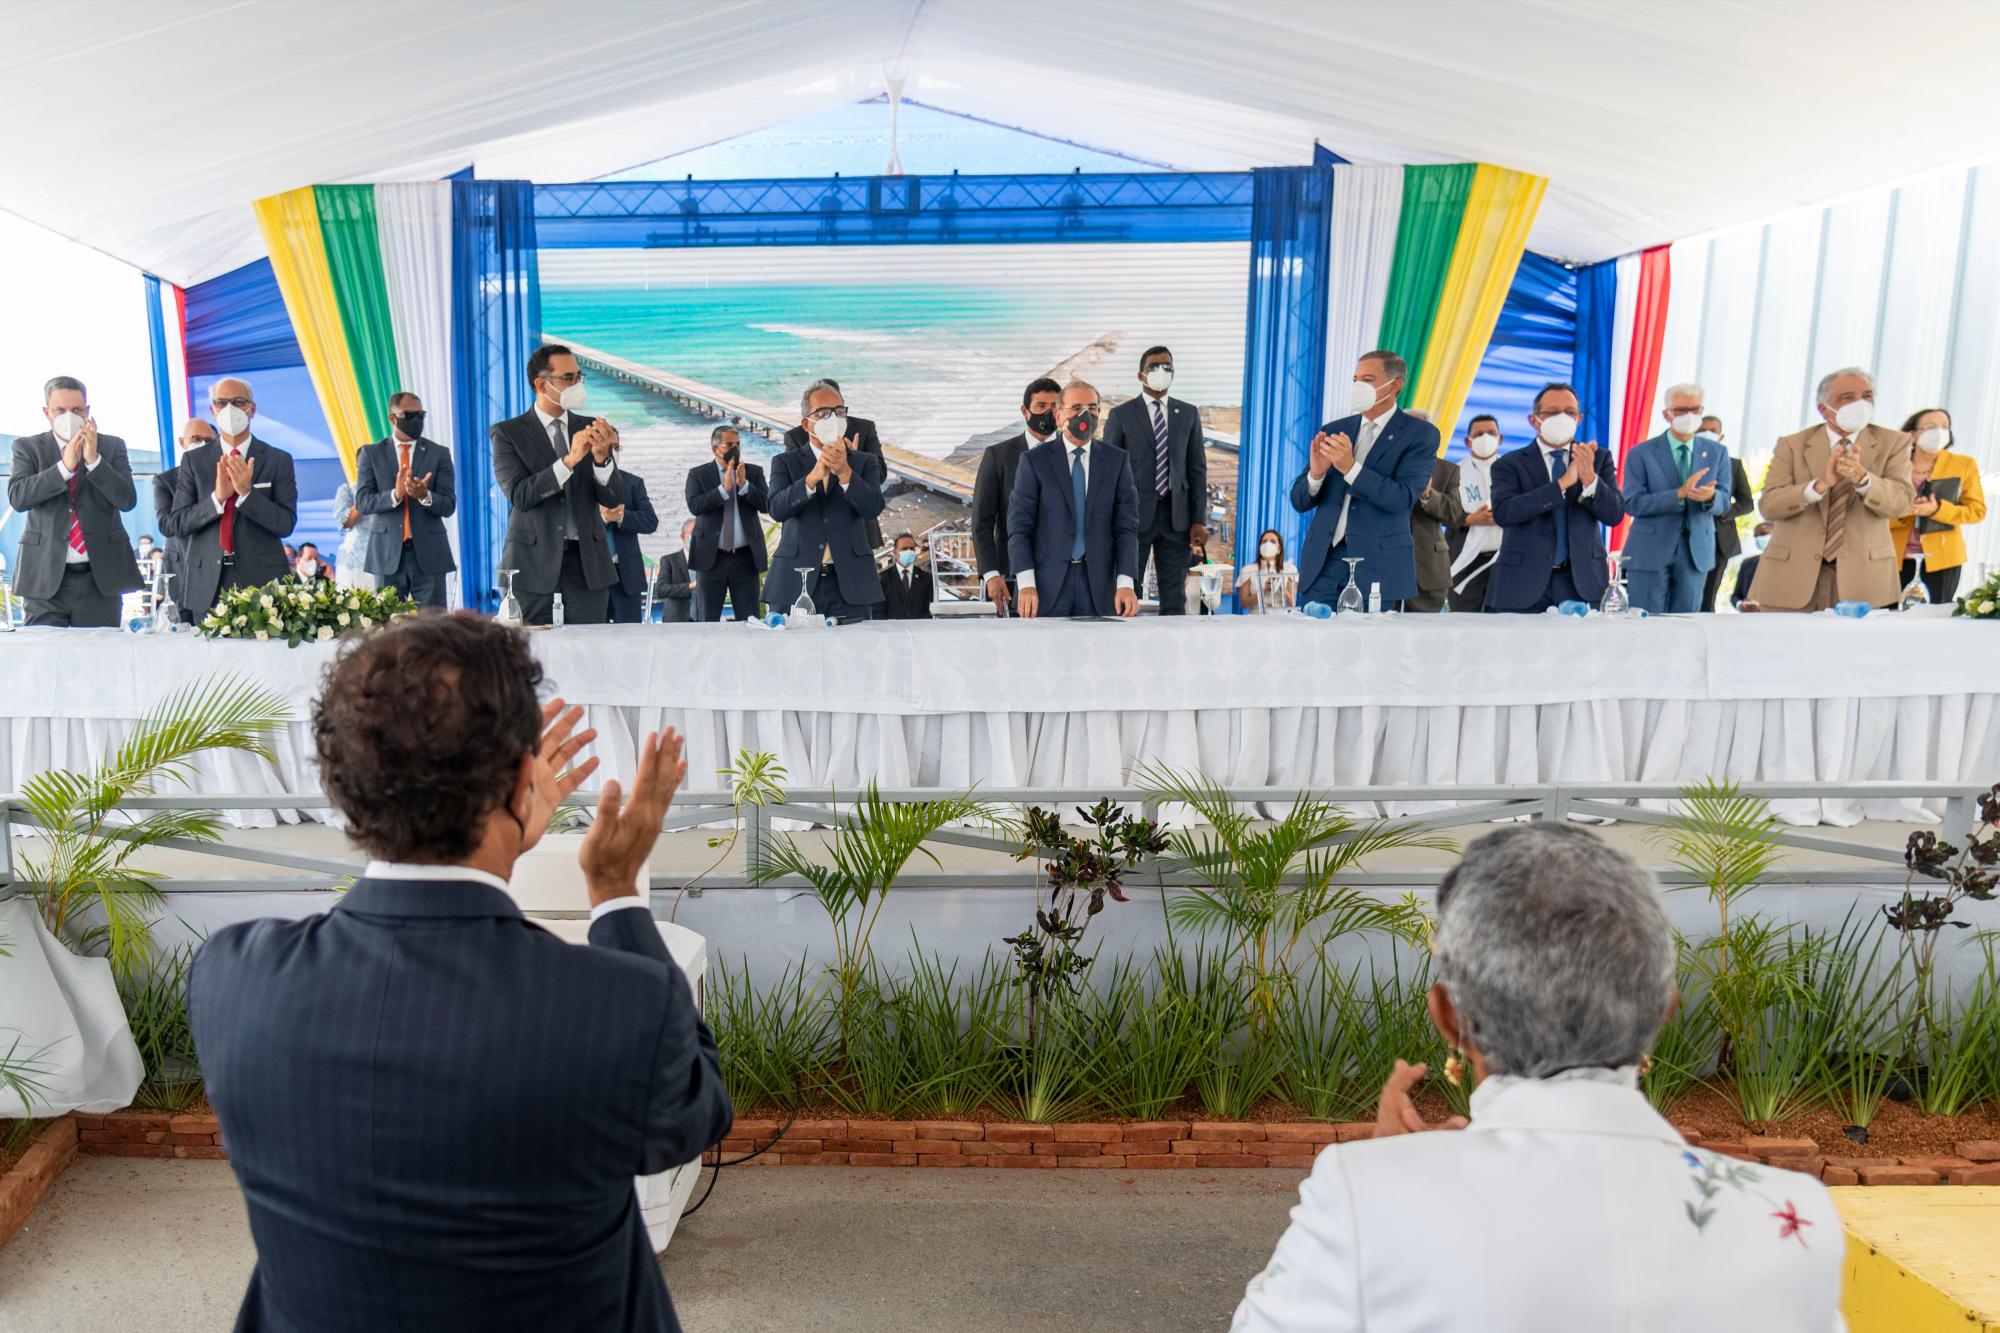 Dos caballeros aplauden al presidente Danilo Medina momentos antes de iniciar la ceremonia de inauguración de la controversial planta Termoeléctrica Punta Catalina. Foto: Pedro Bazil/Diario Libre.